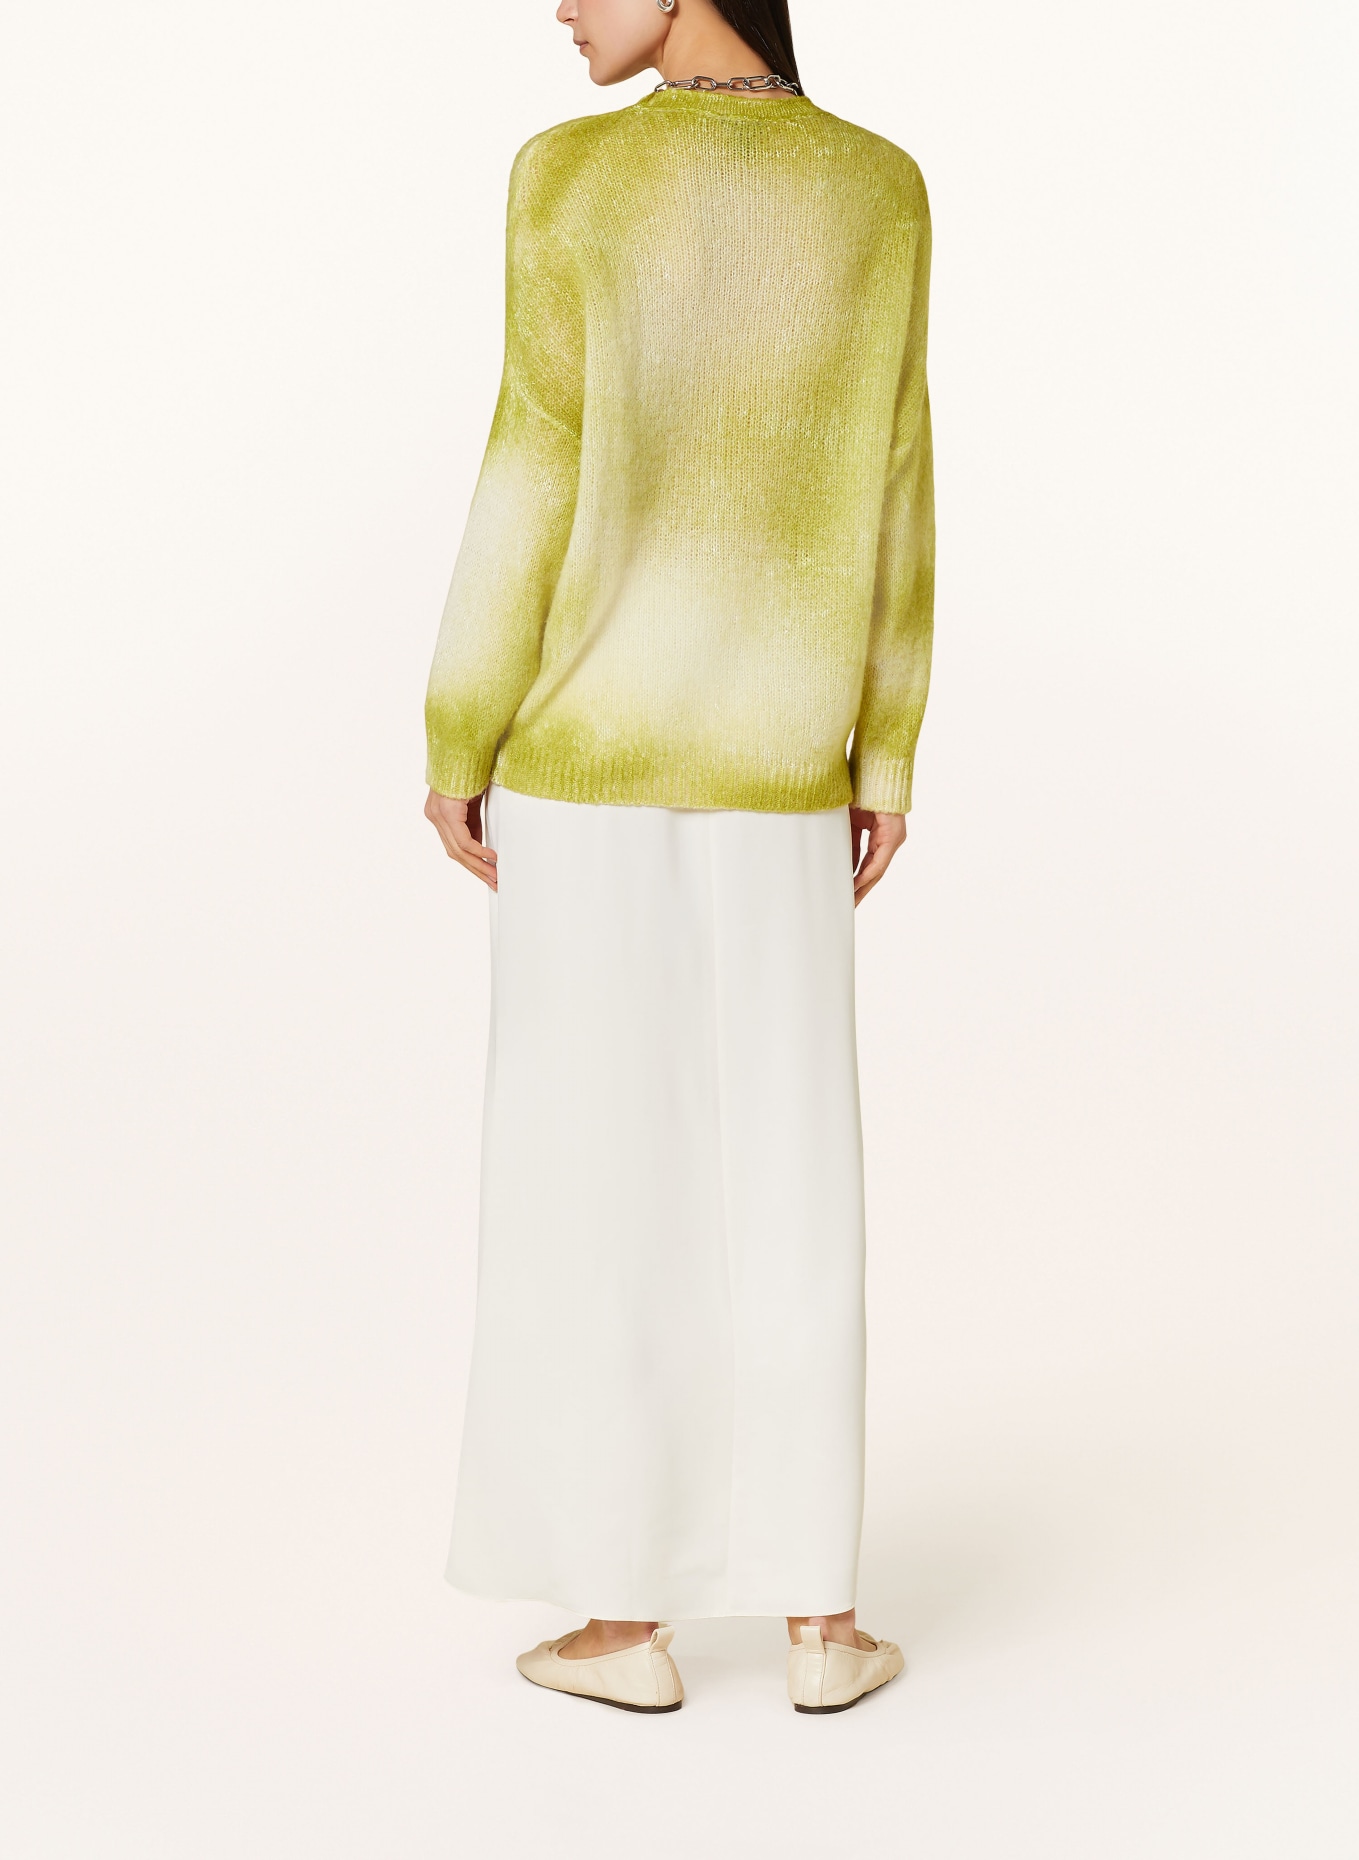 AVANT TOI Cashmere-Pullover, Farbe: 19 lime lime (Bild 3)